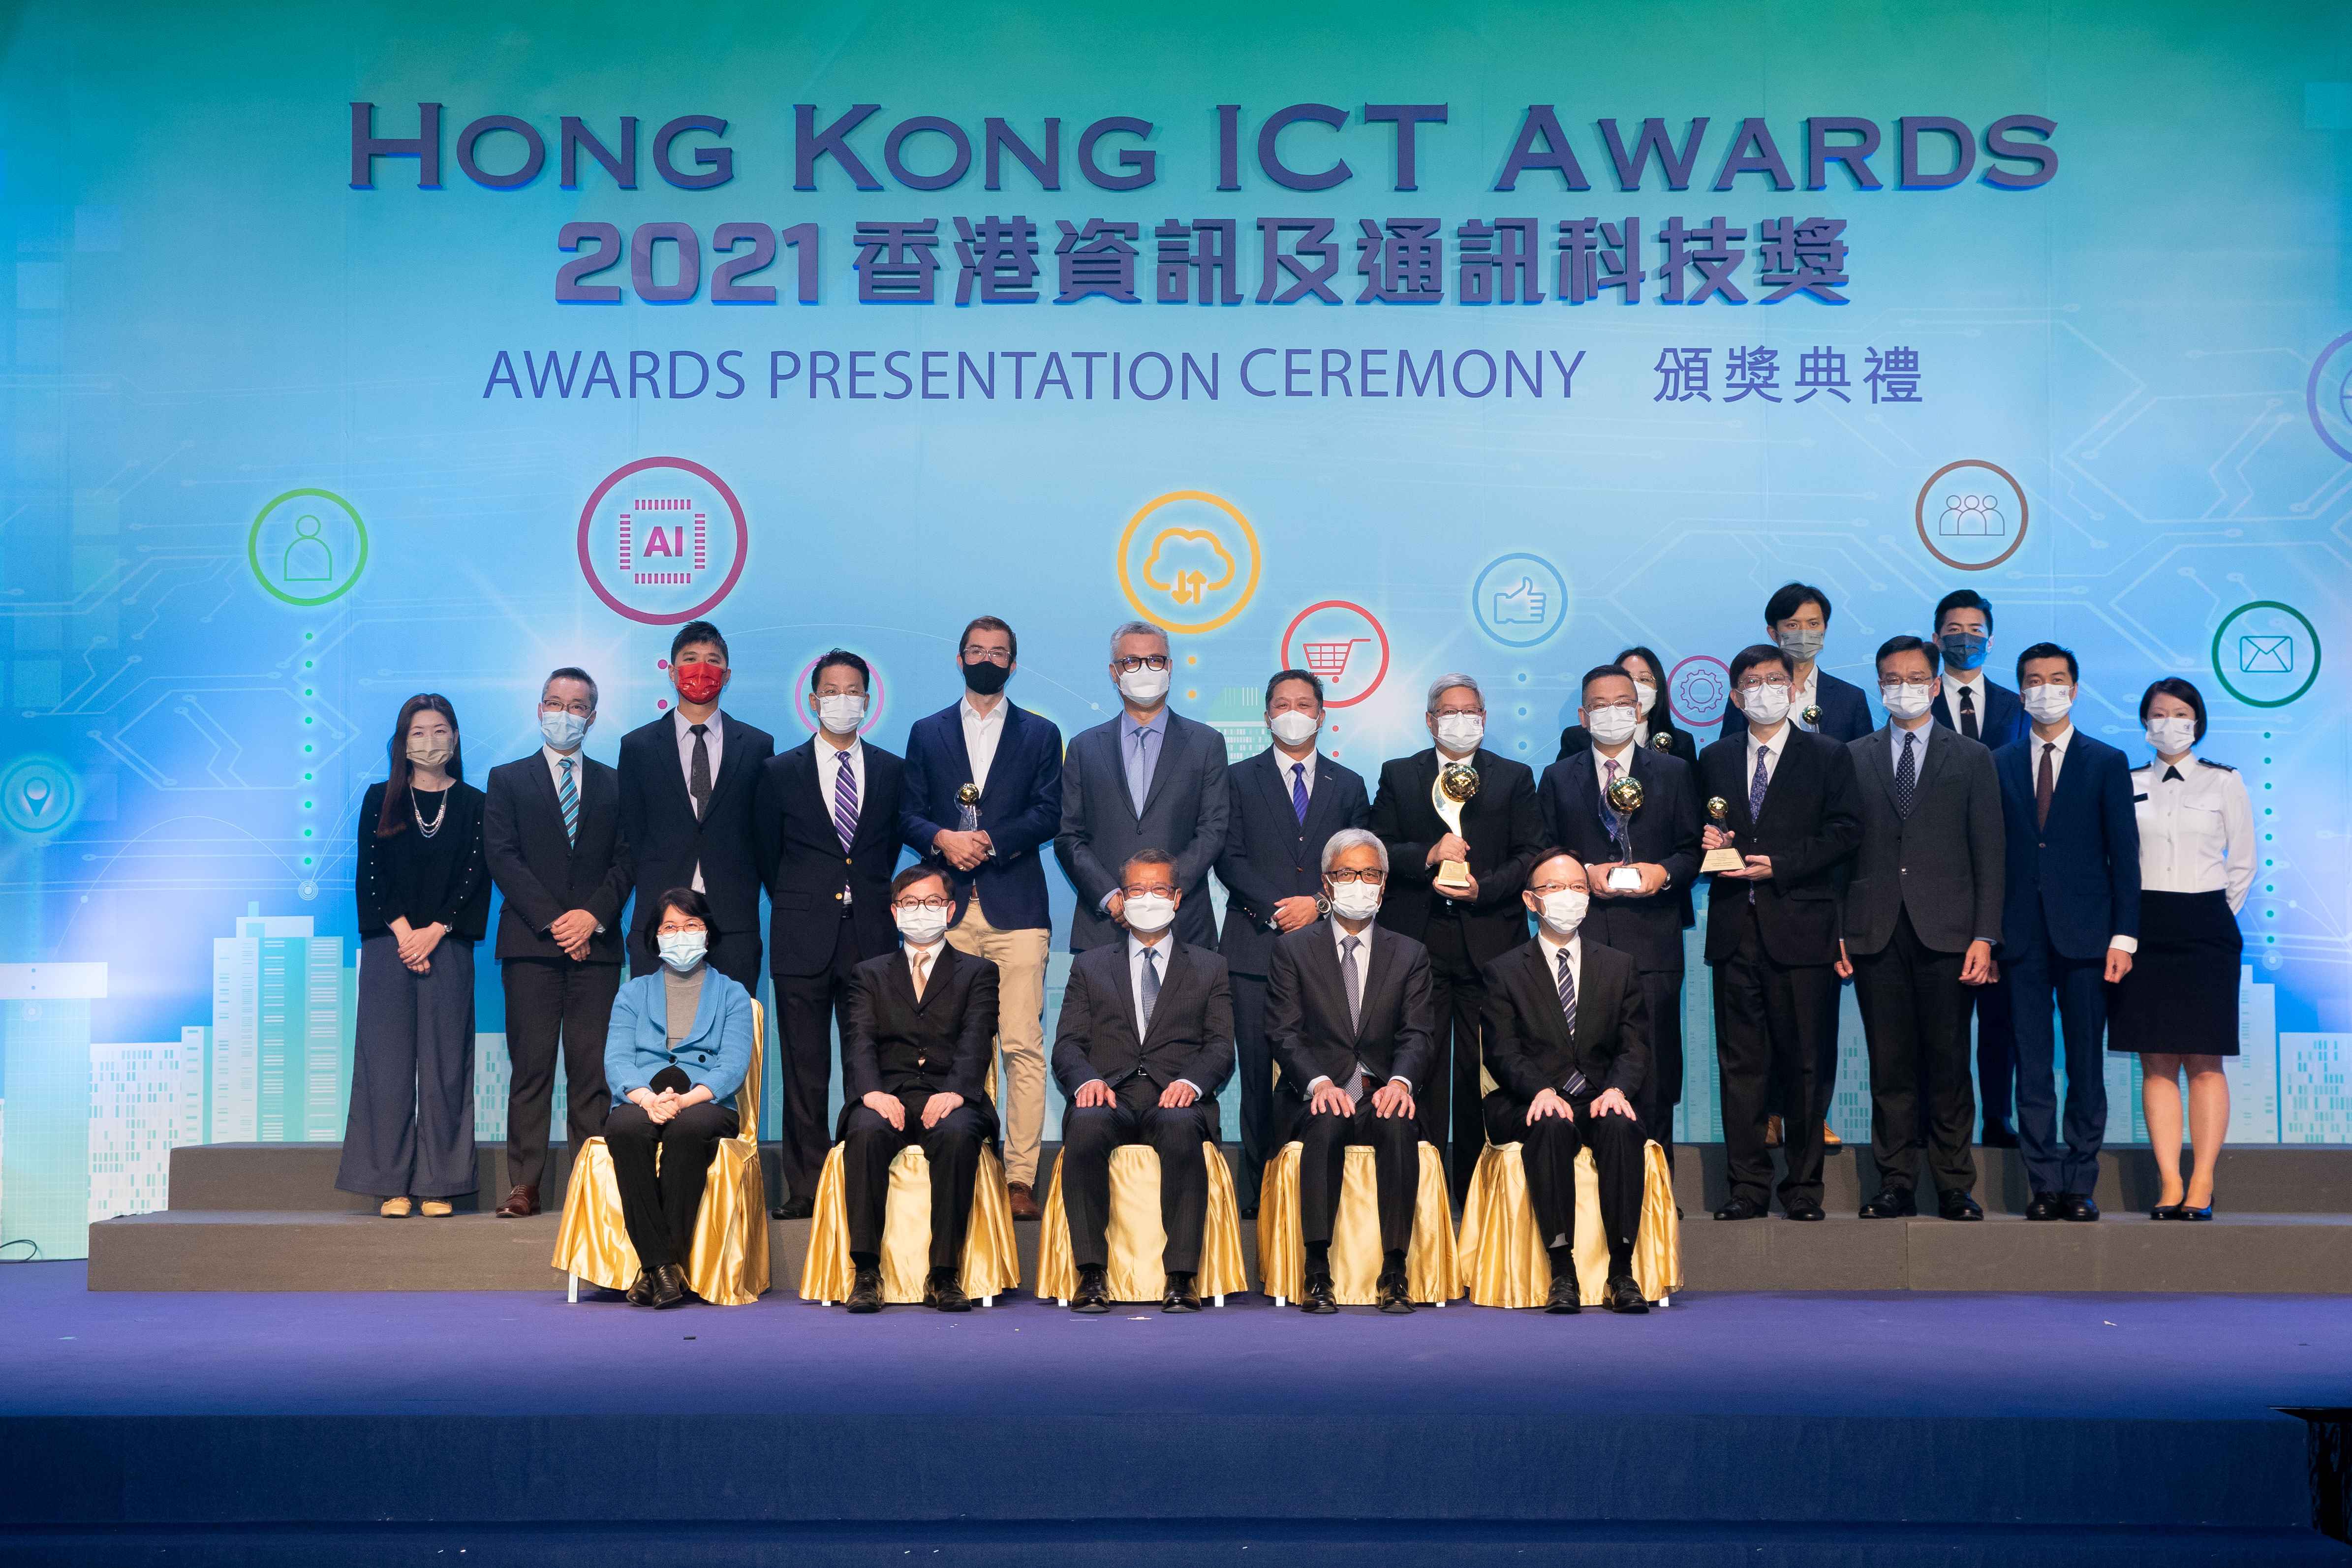 Hong Kong ICT Awards 2021 Smart Business Award Winners Group Photo